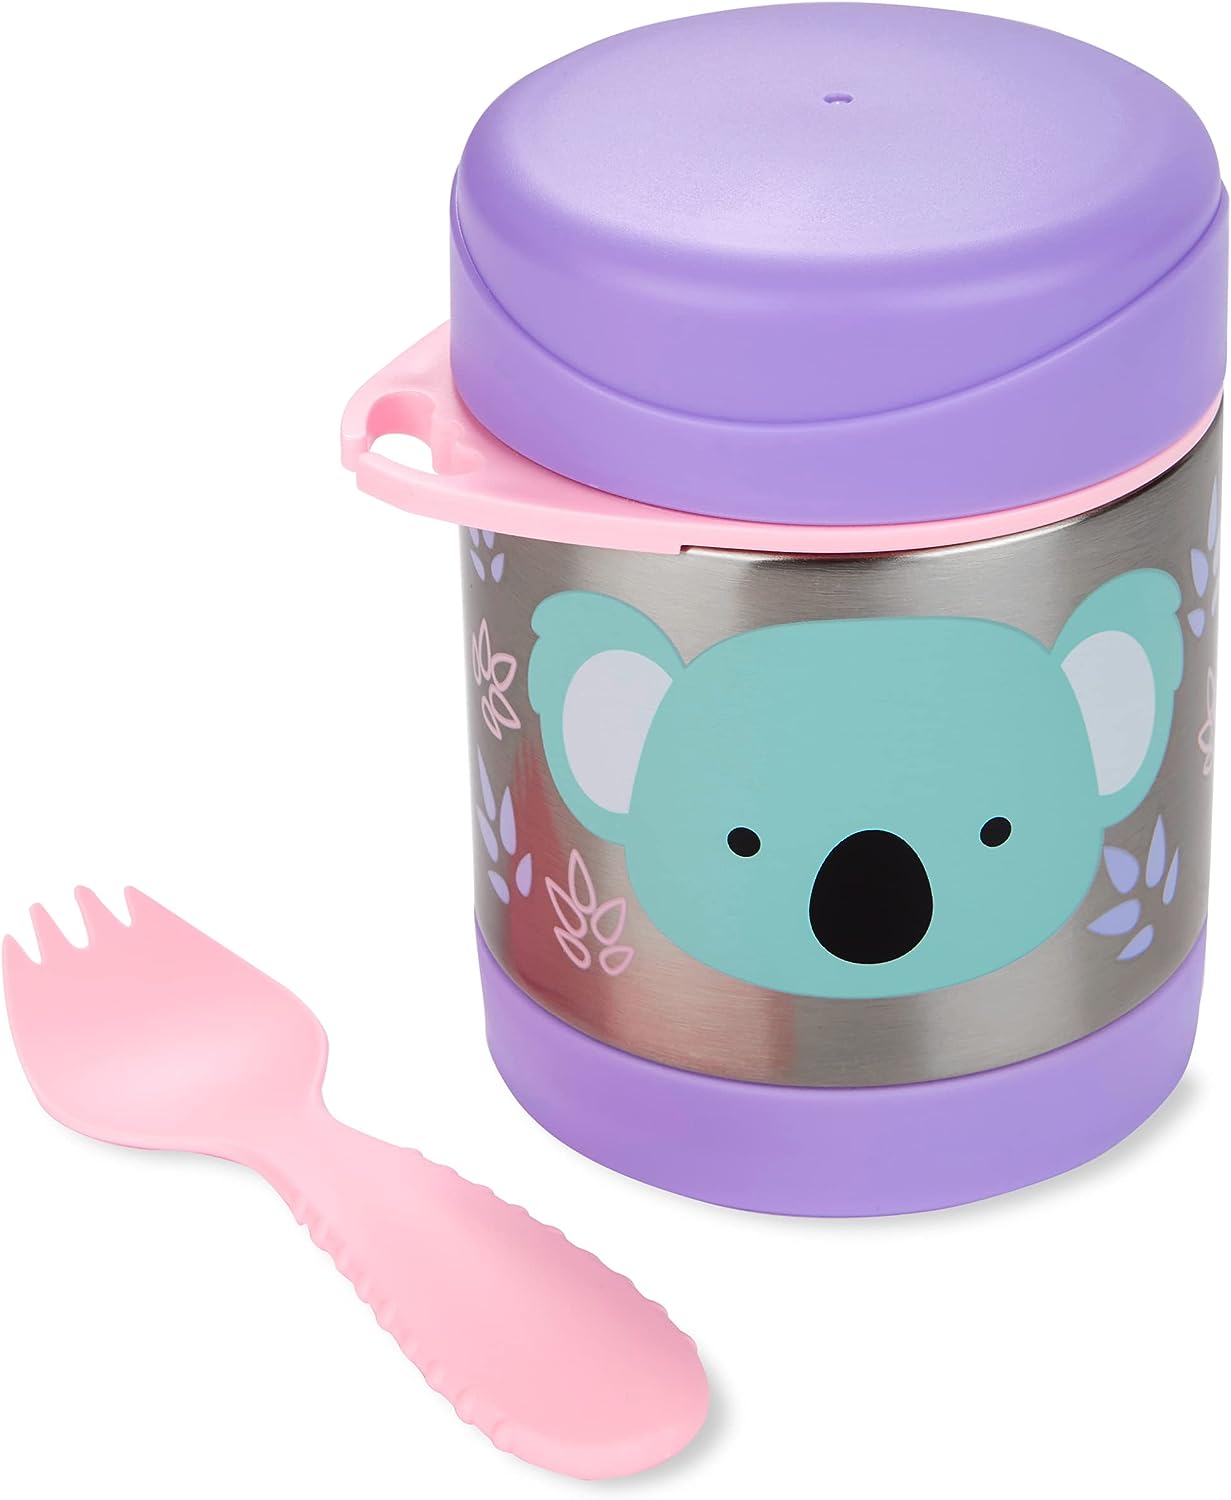 Zoo Insulated Little Kid Food Jar - Koala